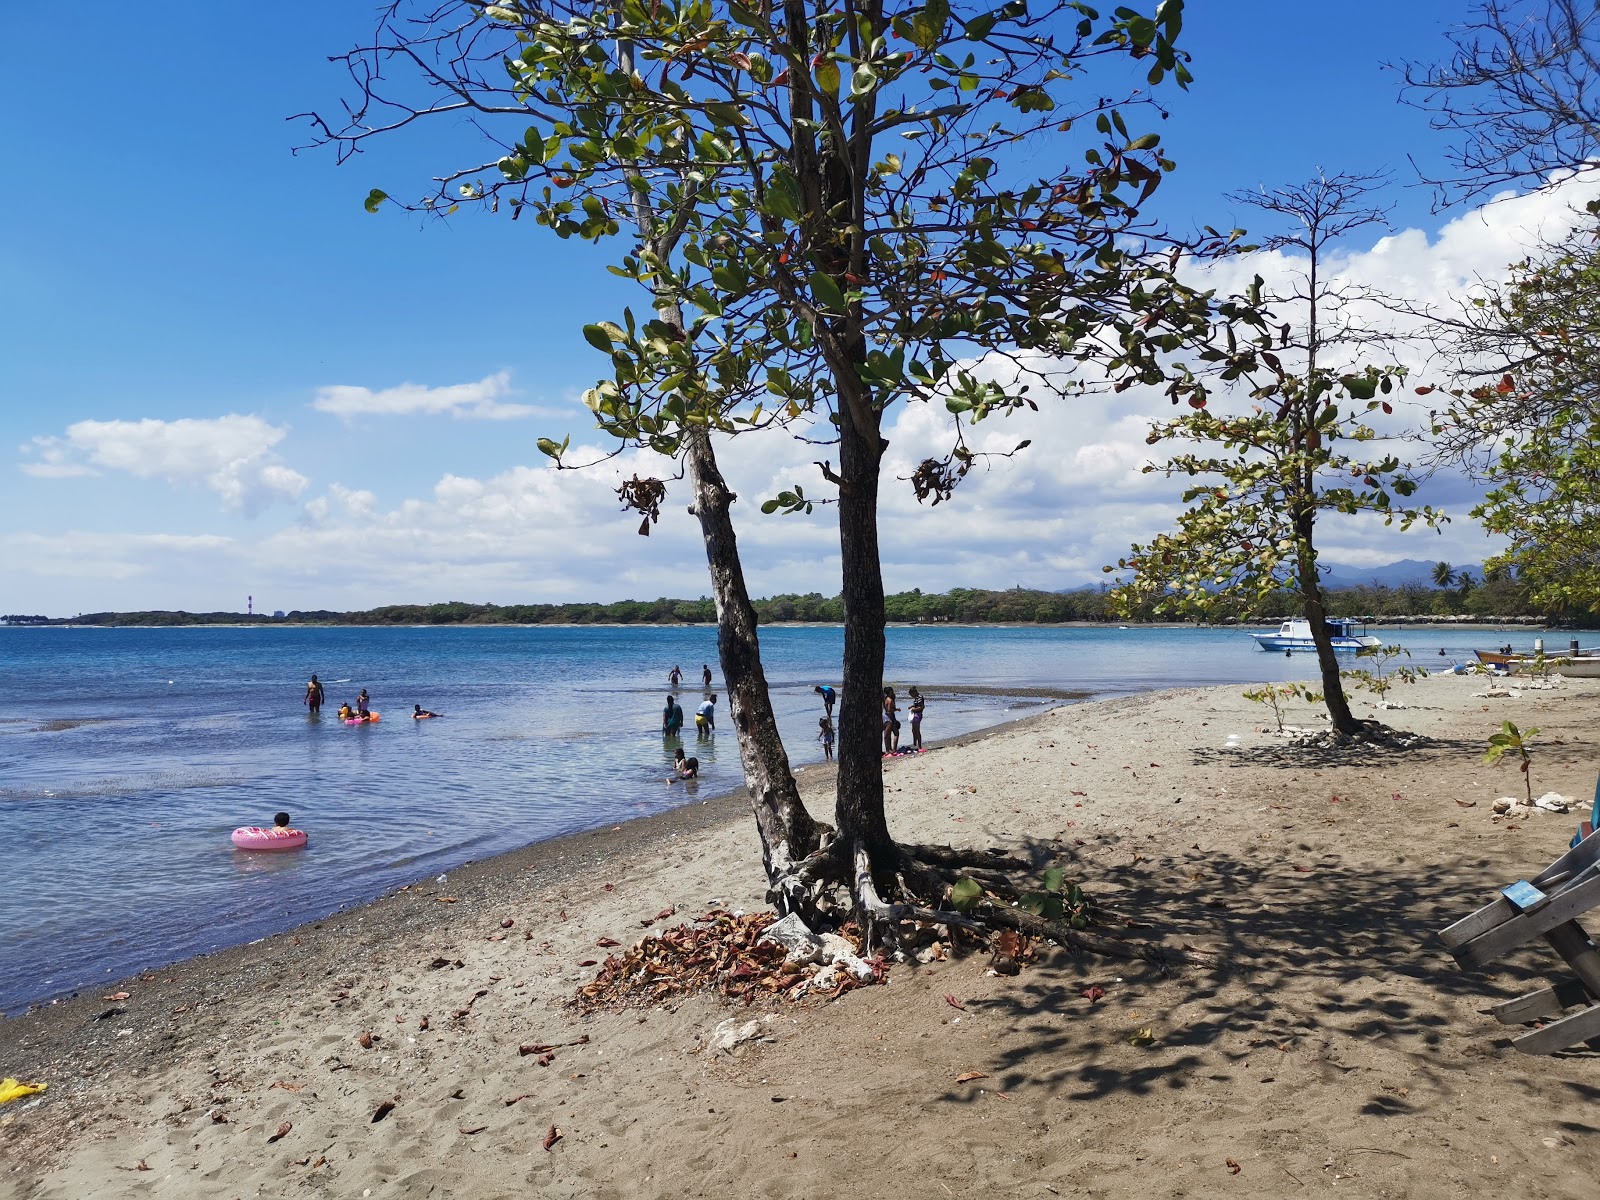 Palenque beach'in fotoğrafı turkuaz su yüzey ile